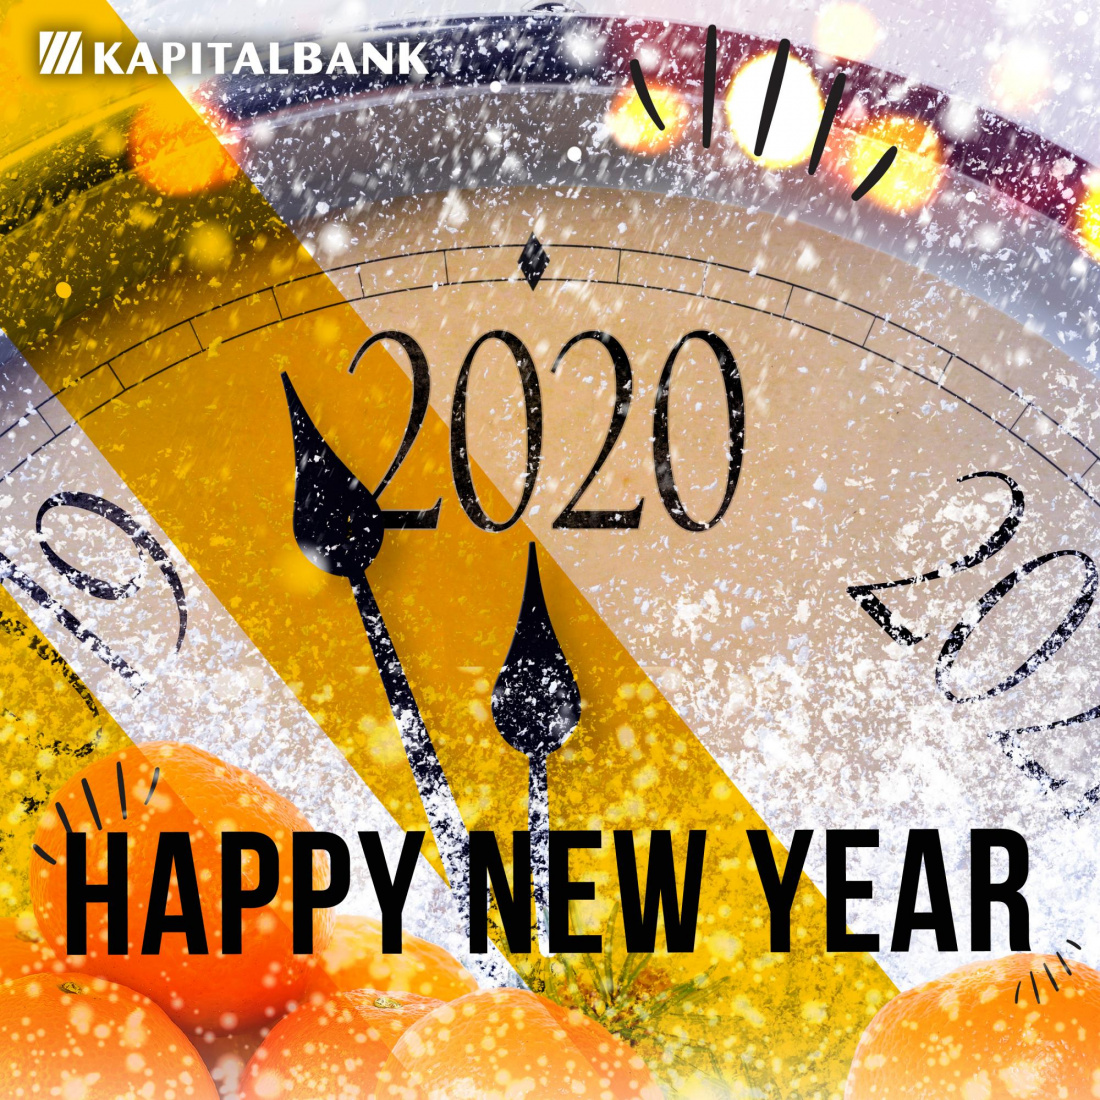 "Kapitalbank" JSCB  congratulates everybody with upcoming 2020 year!